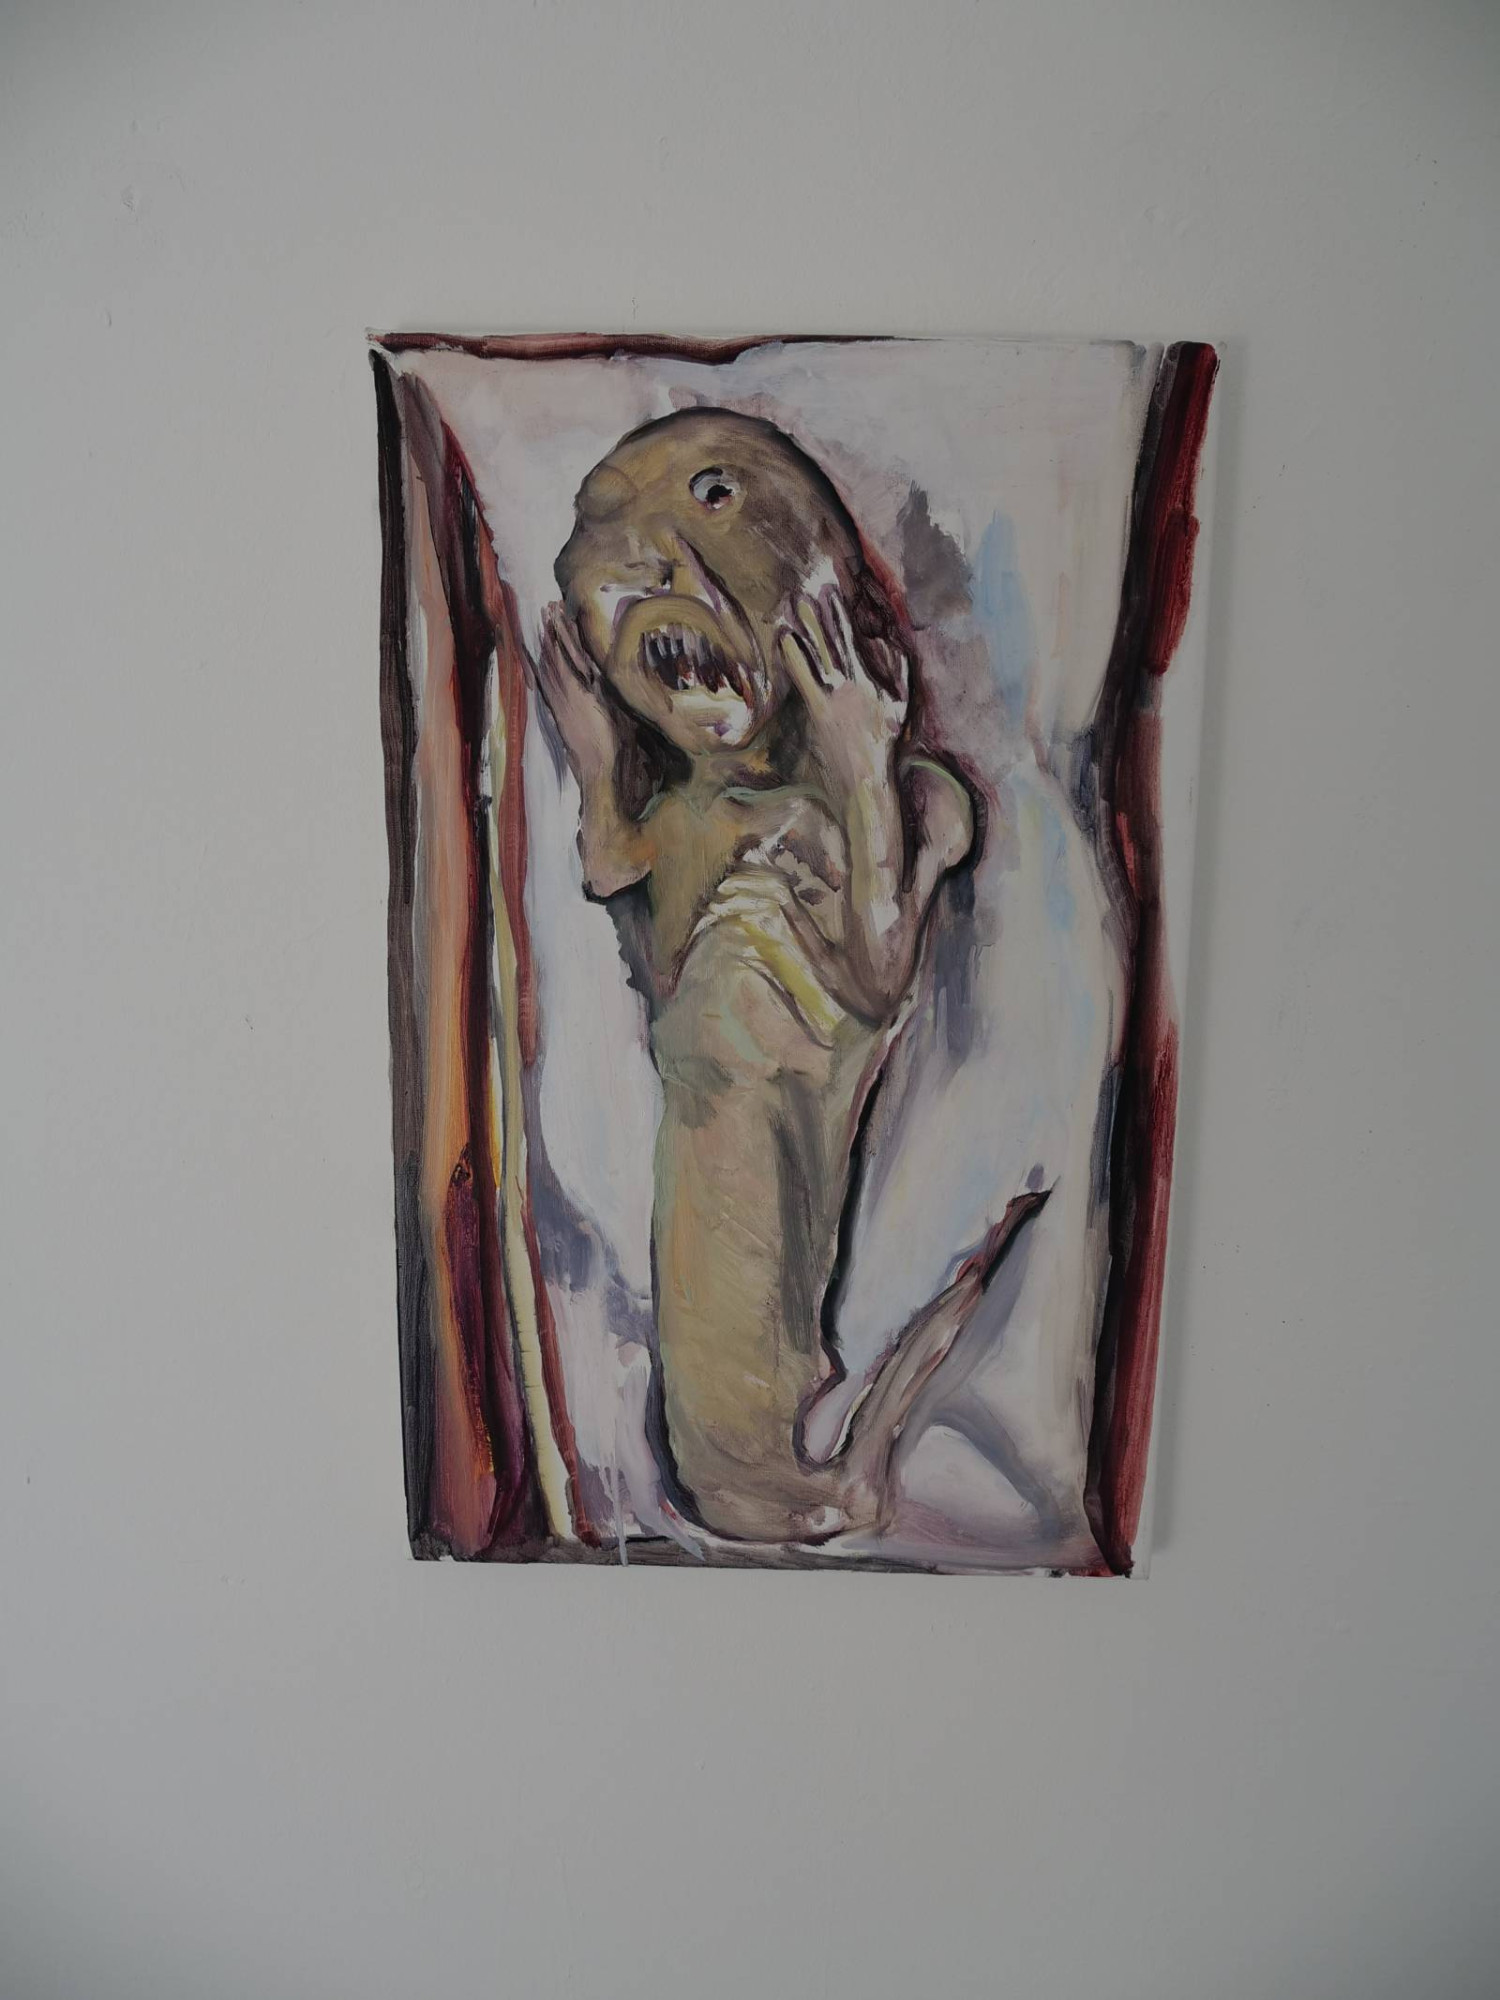 *The Scream (after Zuiryuji Temple Mermaid)*, oil on canvas, 36 x 56cm